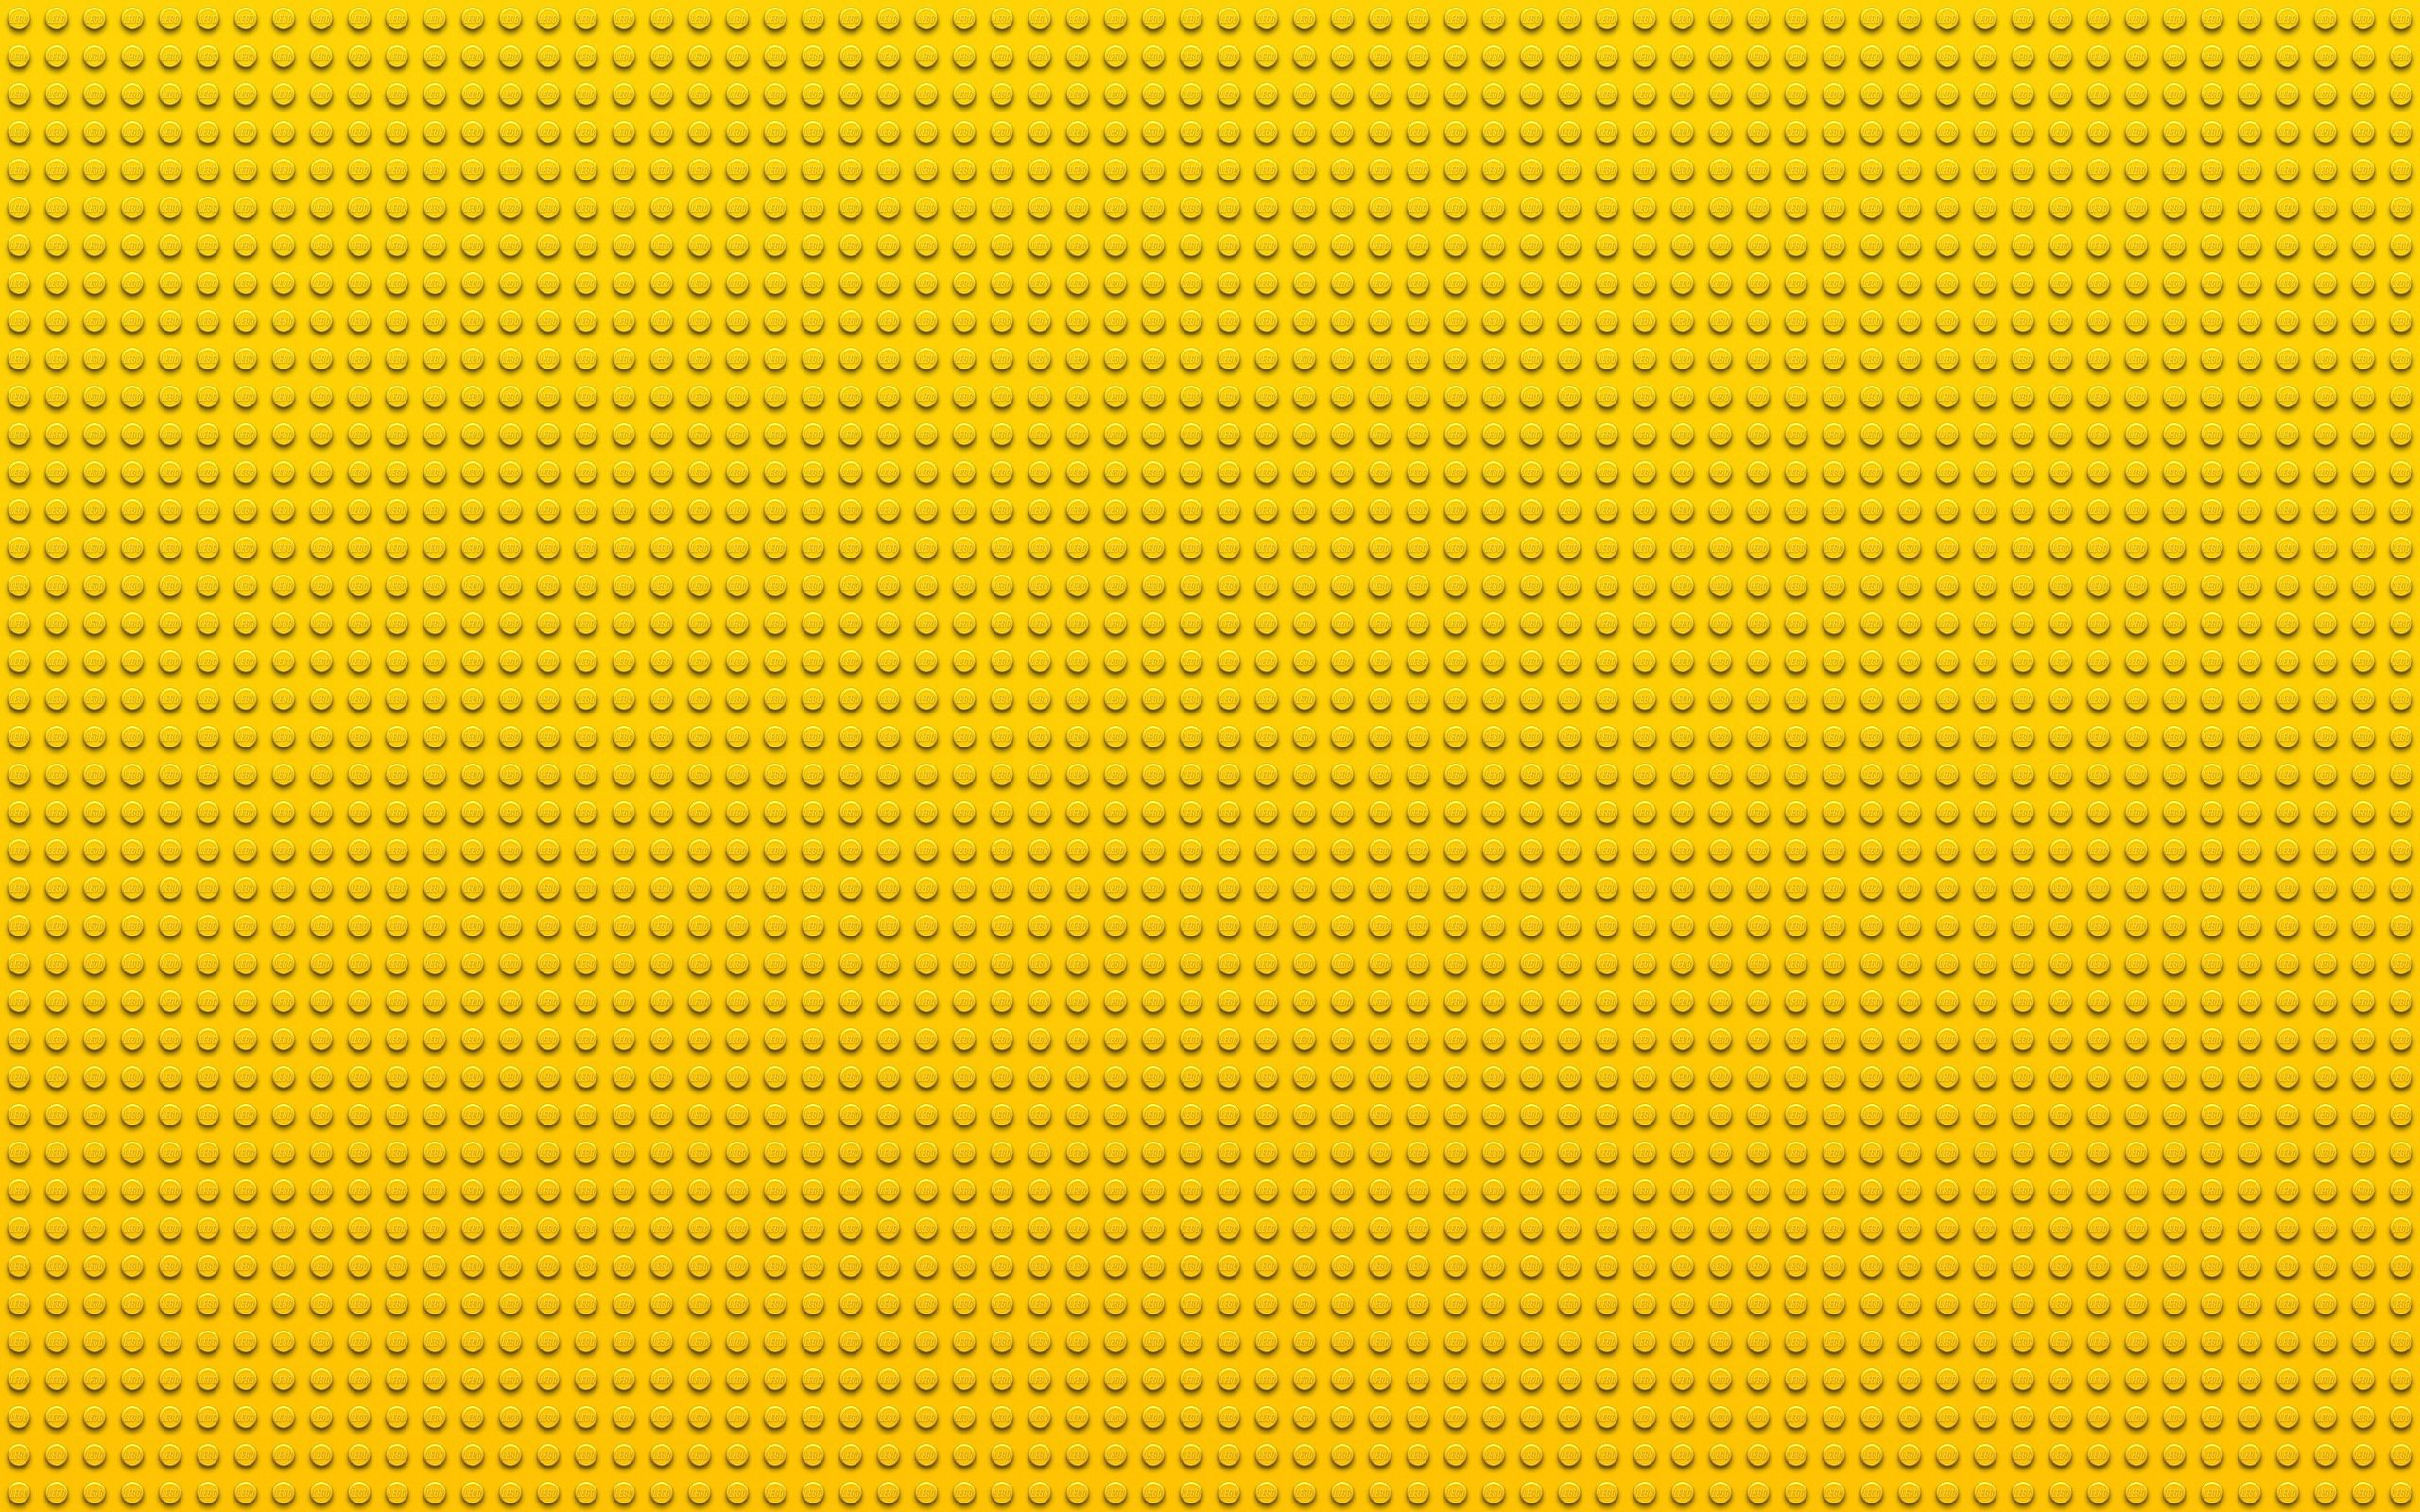 lego, yellow, circles, texture, textures, points, point